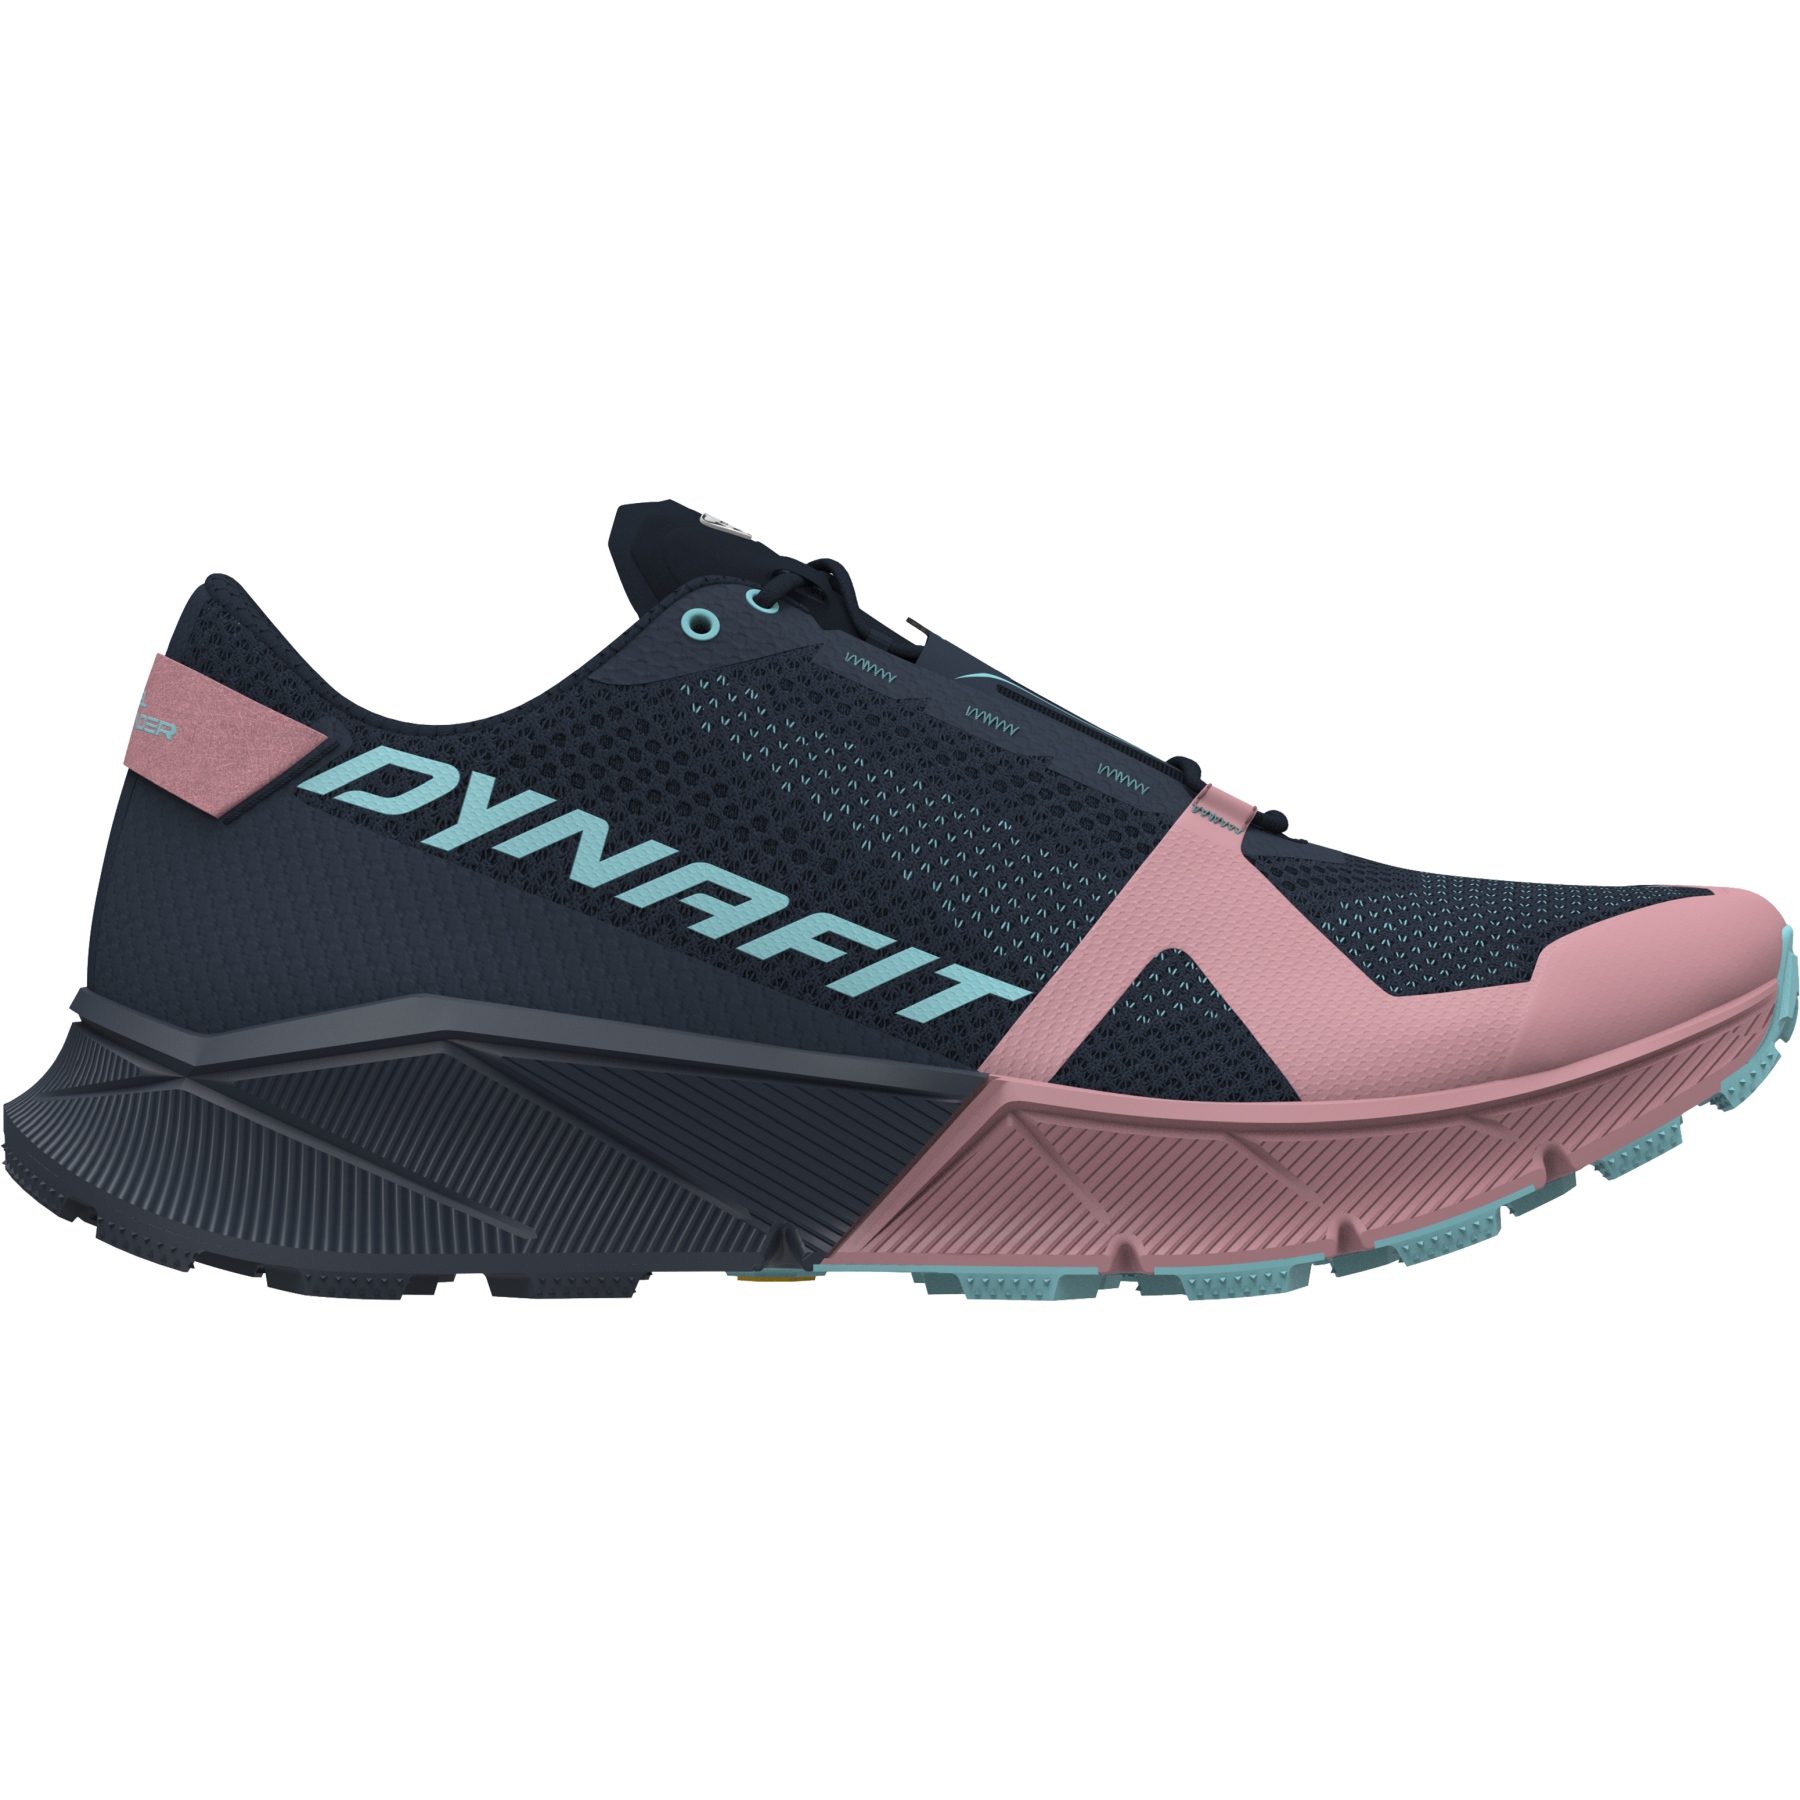 Productfoto van Dynafit Ultra 100 Trail Running Schoenen Dames - Mokarosa/Blueberry